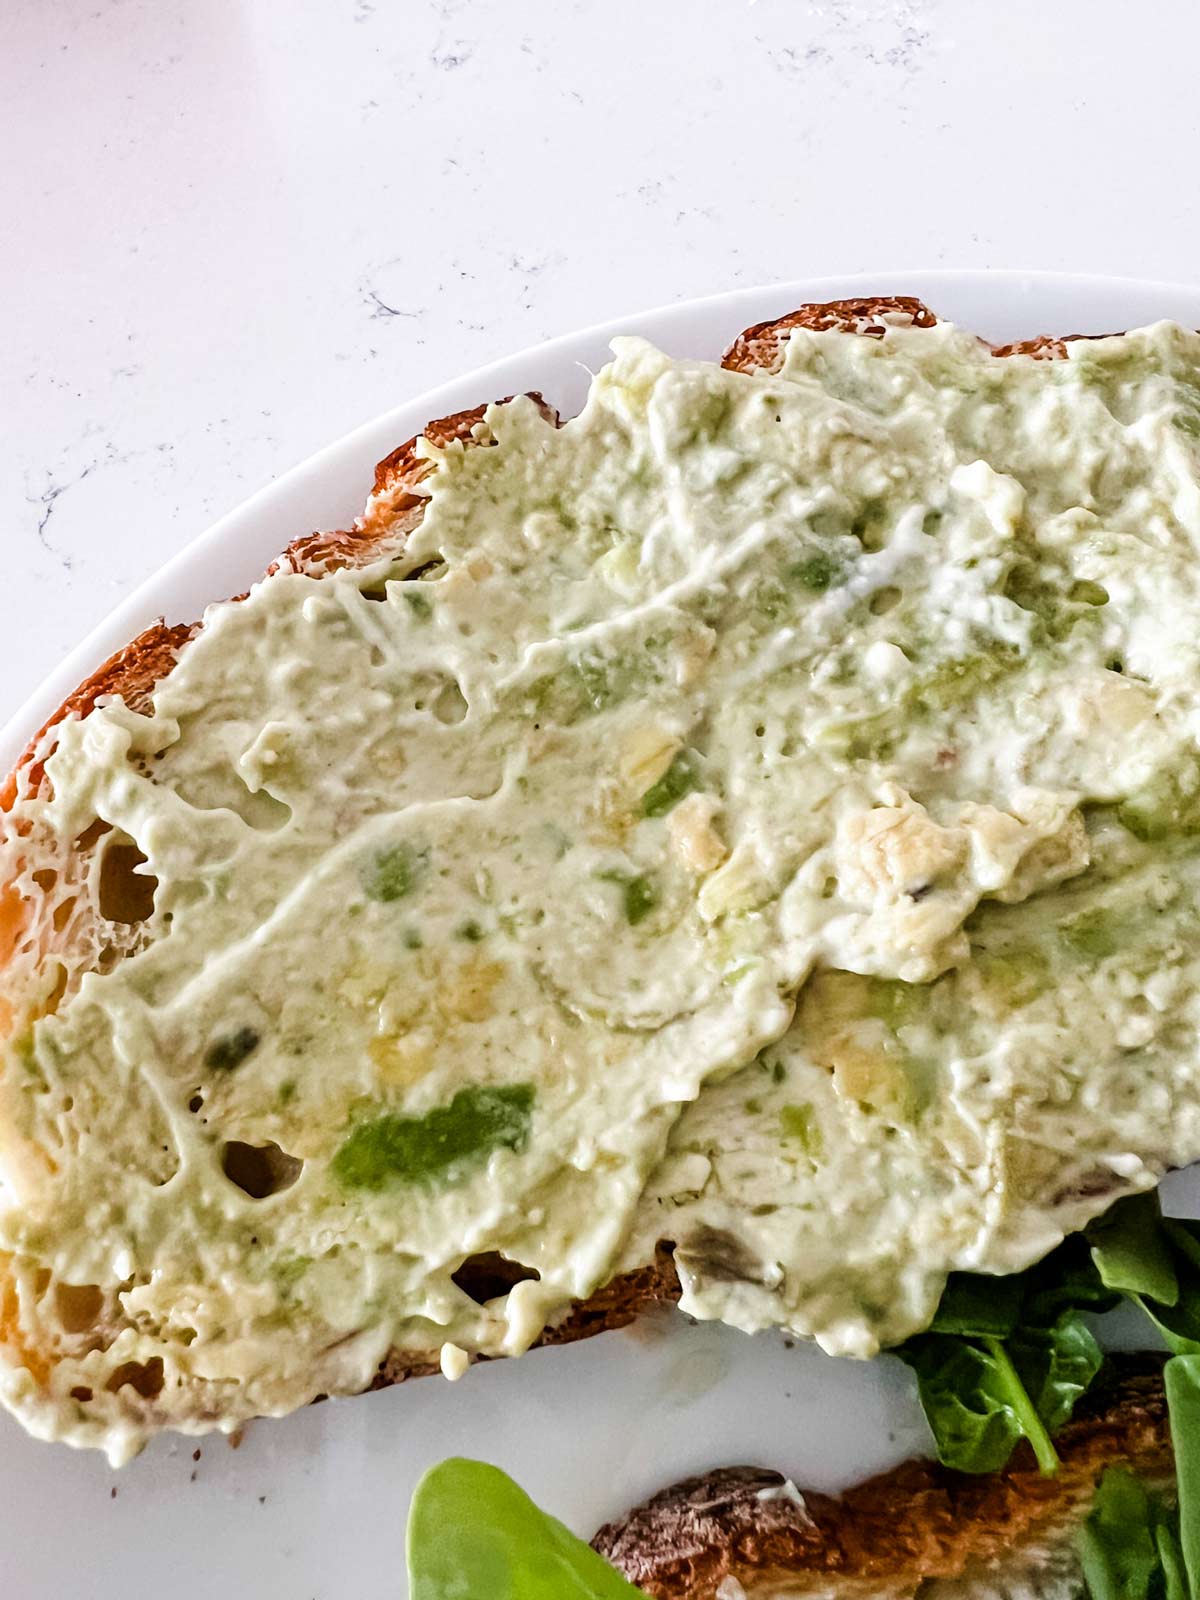 An avocado mayo mixture spread on a slice of bread.